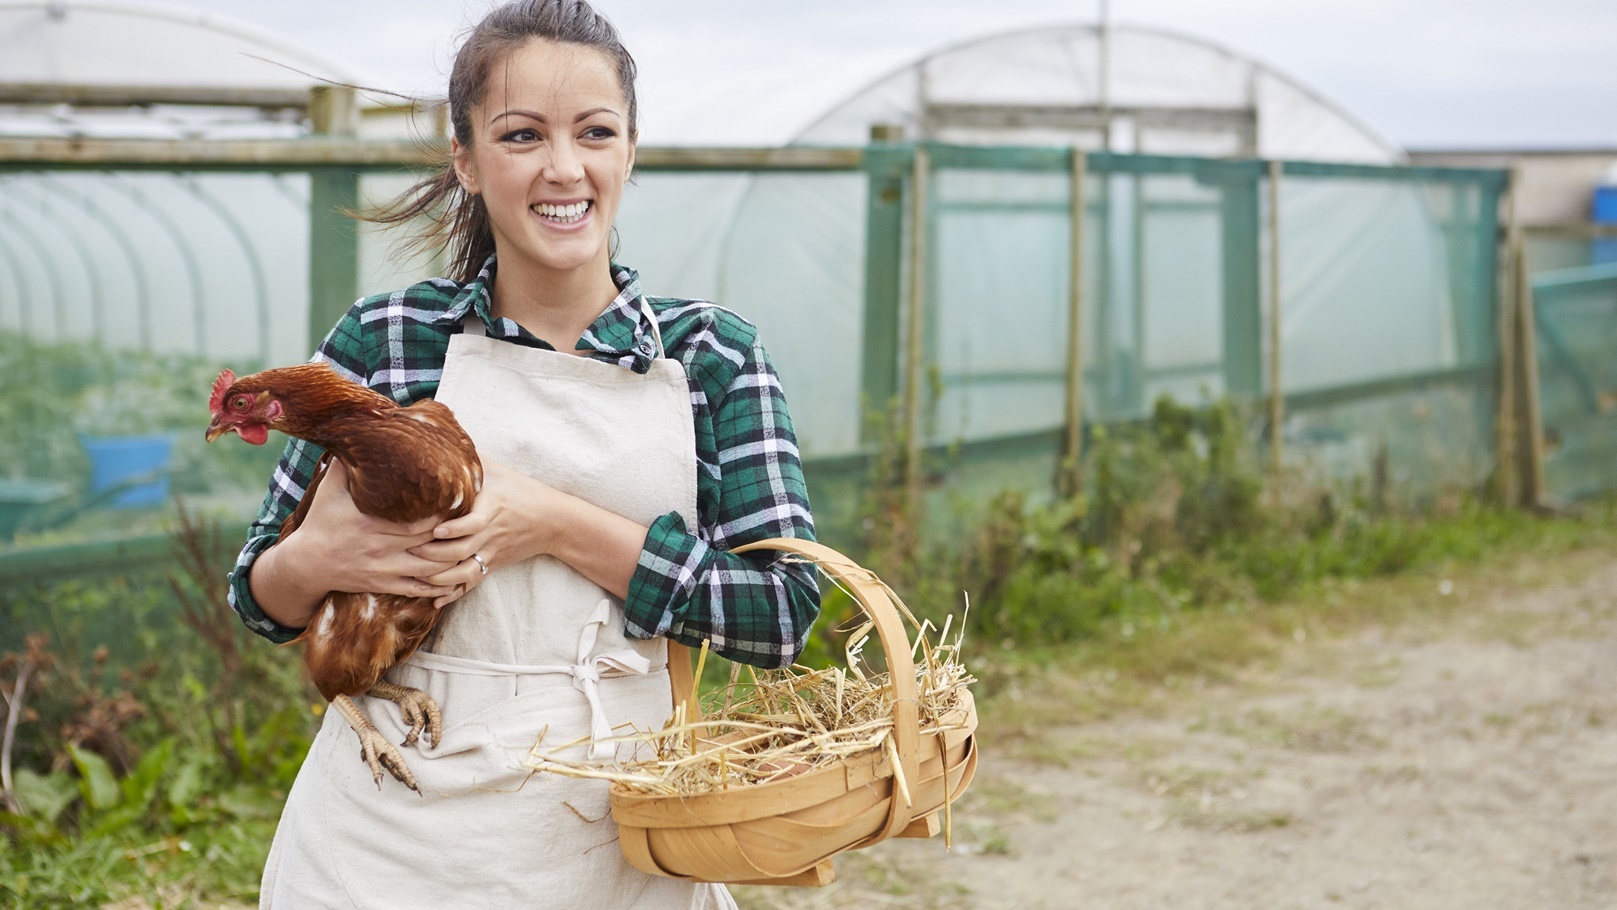 woman-on-chicken-farm-holding-chicken-2022-03-04-01-45-07-utc